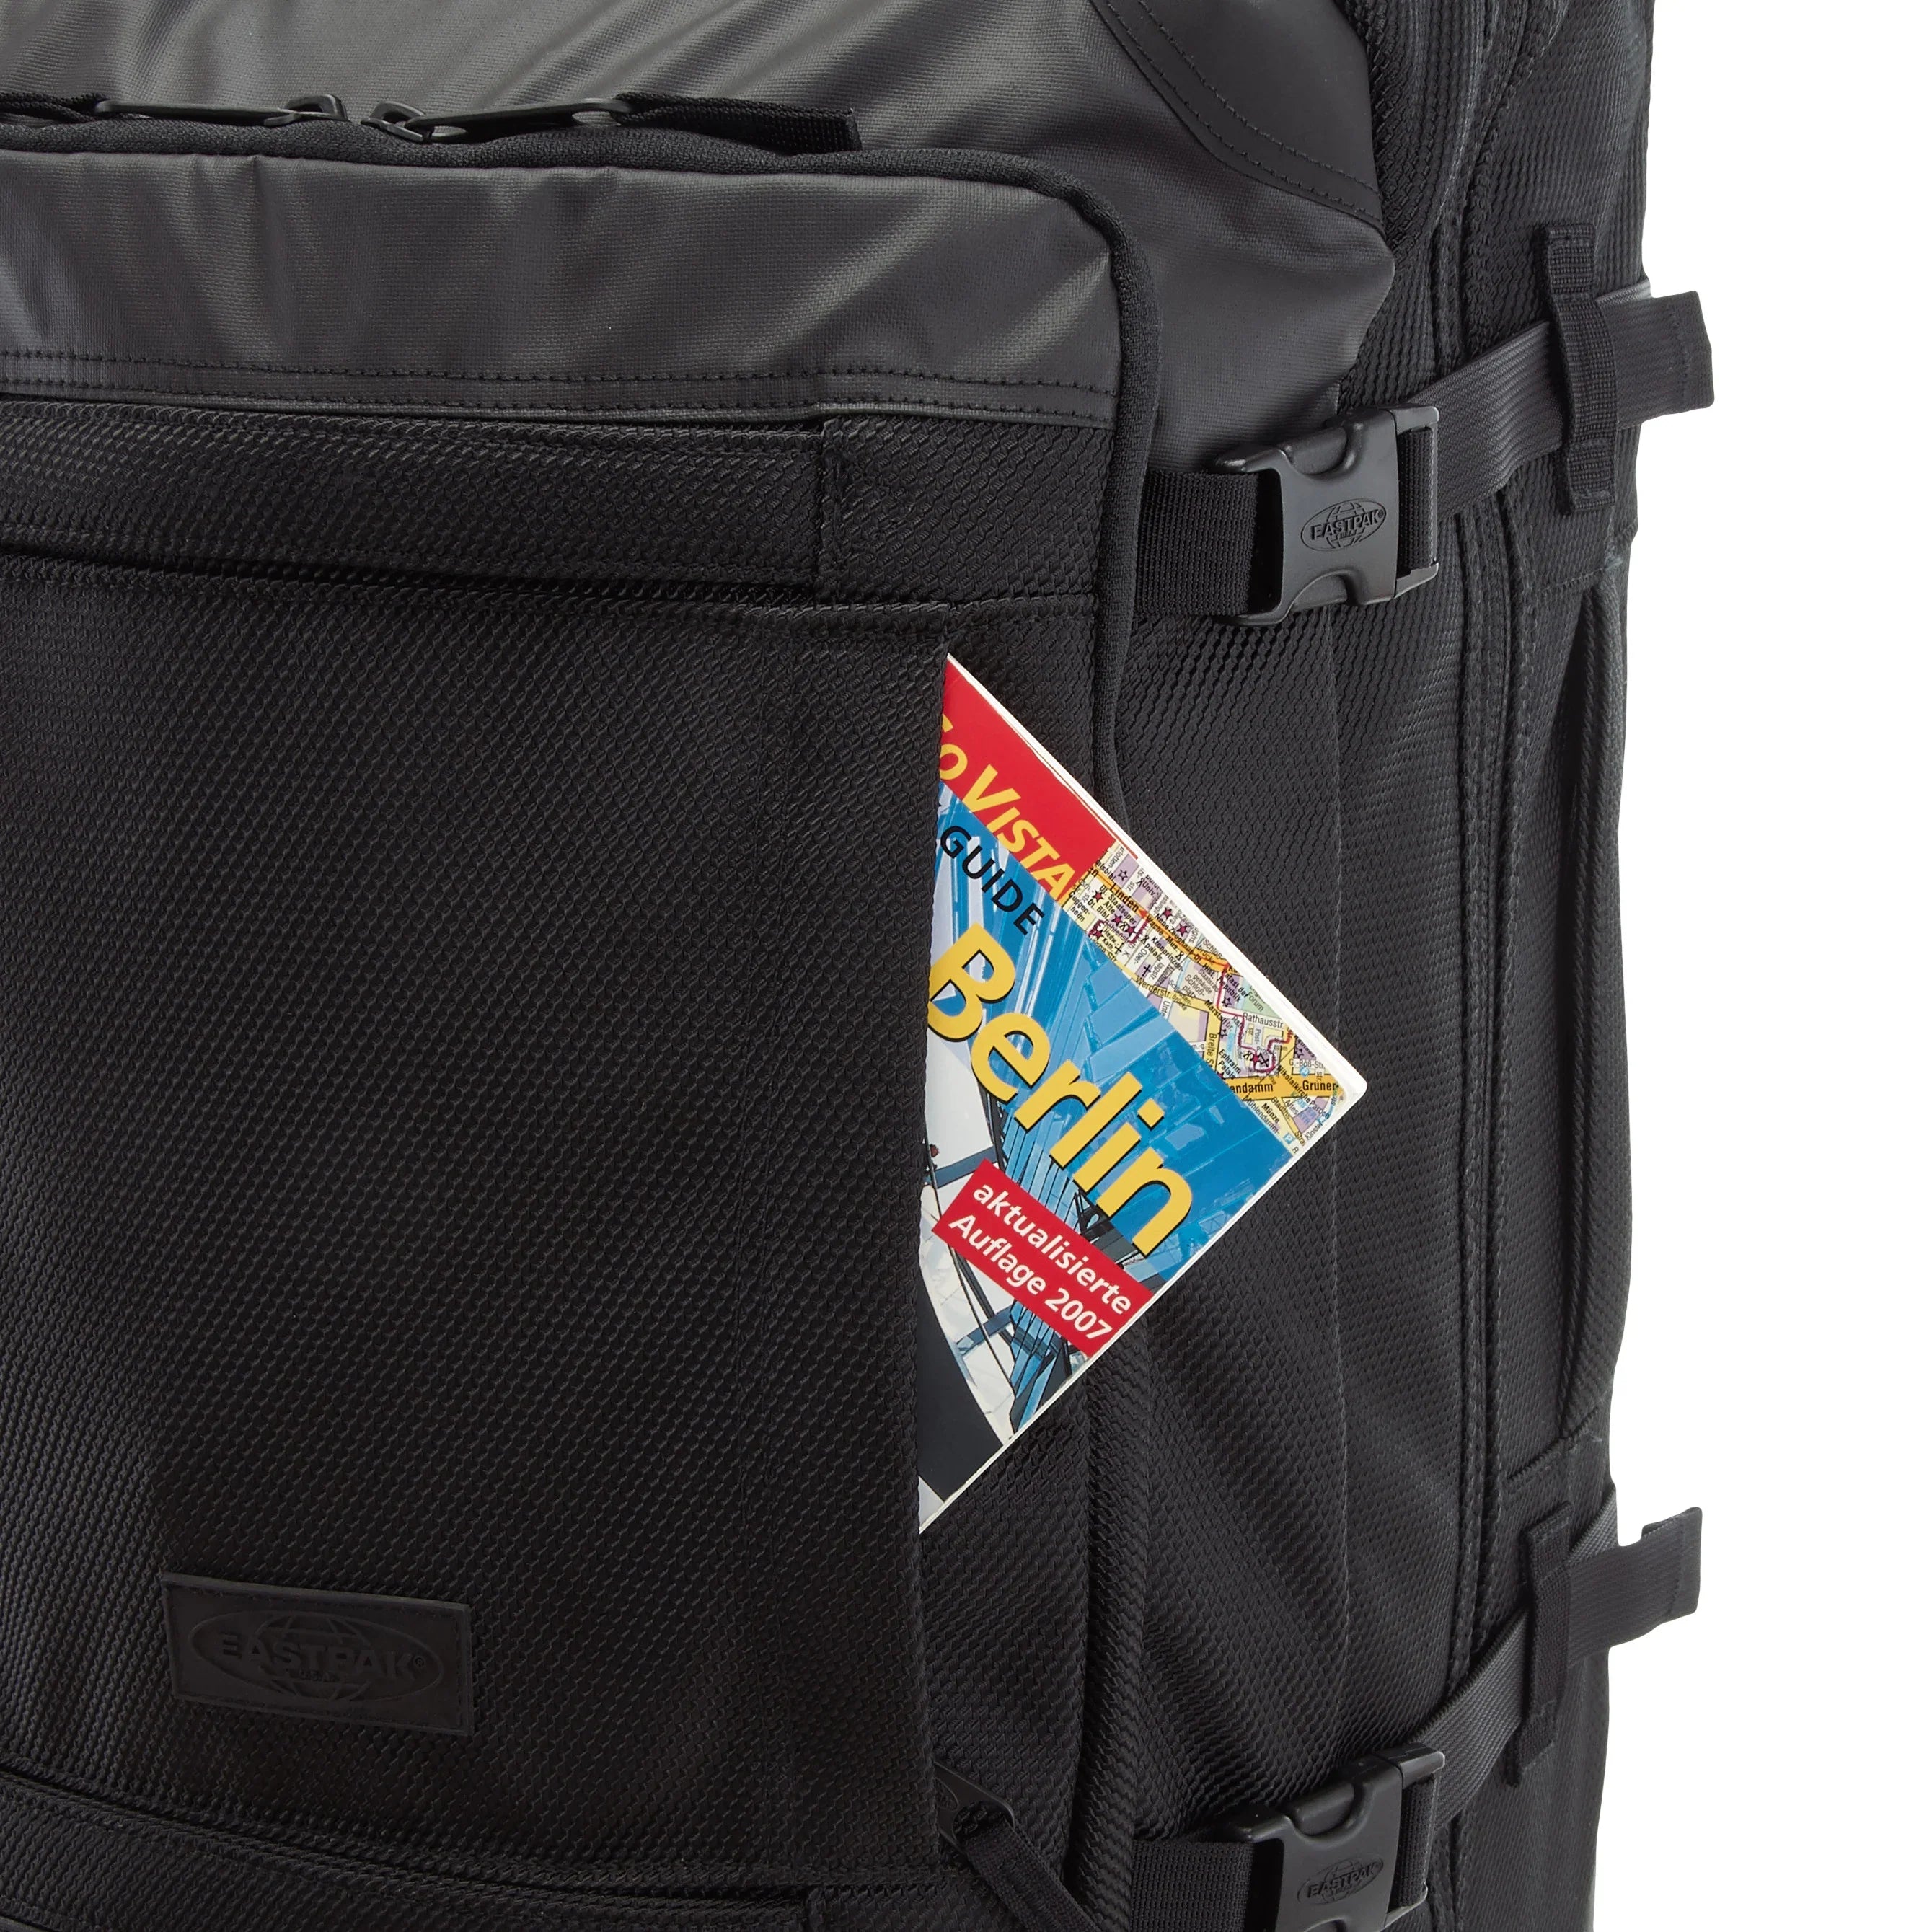 Eastpak Authentic Travel Tranverz CNNCT Rolling Travel Bag 51 cm - Army